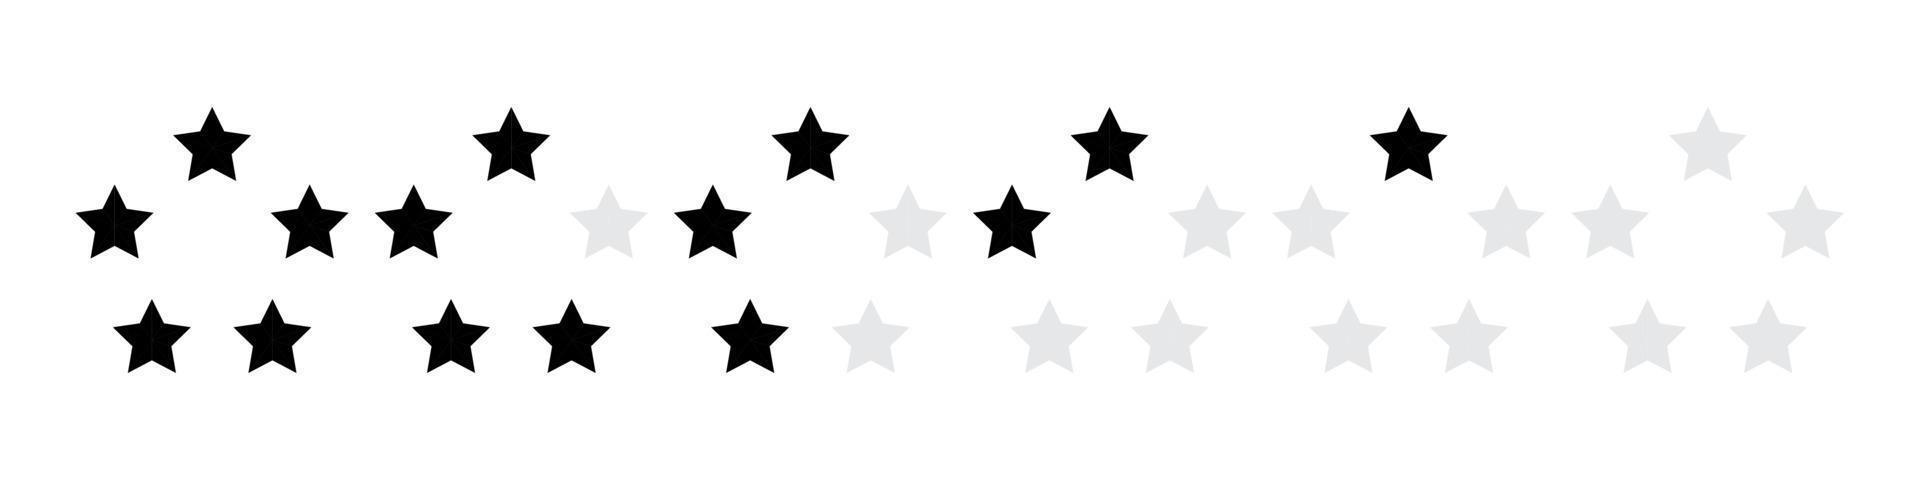 Stern-Symbol. Stern im Kreis. 5 Sterne Bewertung. Satz von fünf Sternen. Stern-Set-Vektor-Symbol. Feedback-Konzept. Vektor-Illustration vektor